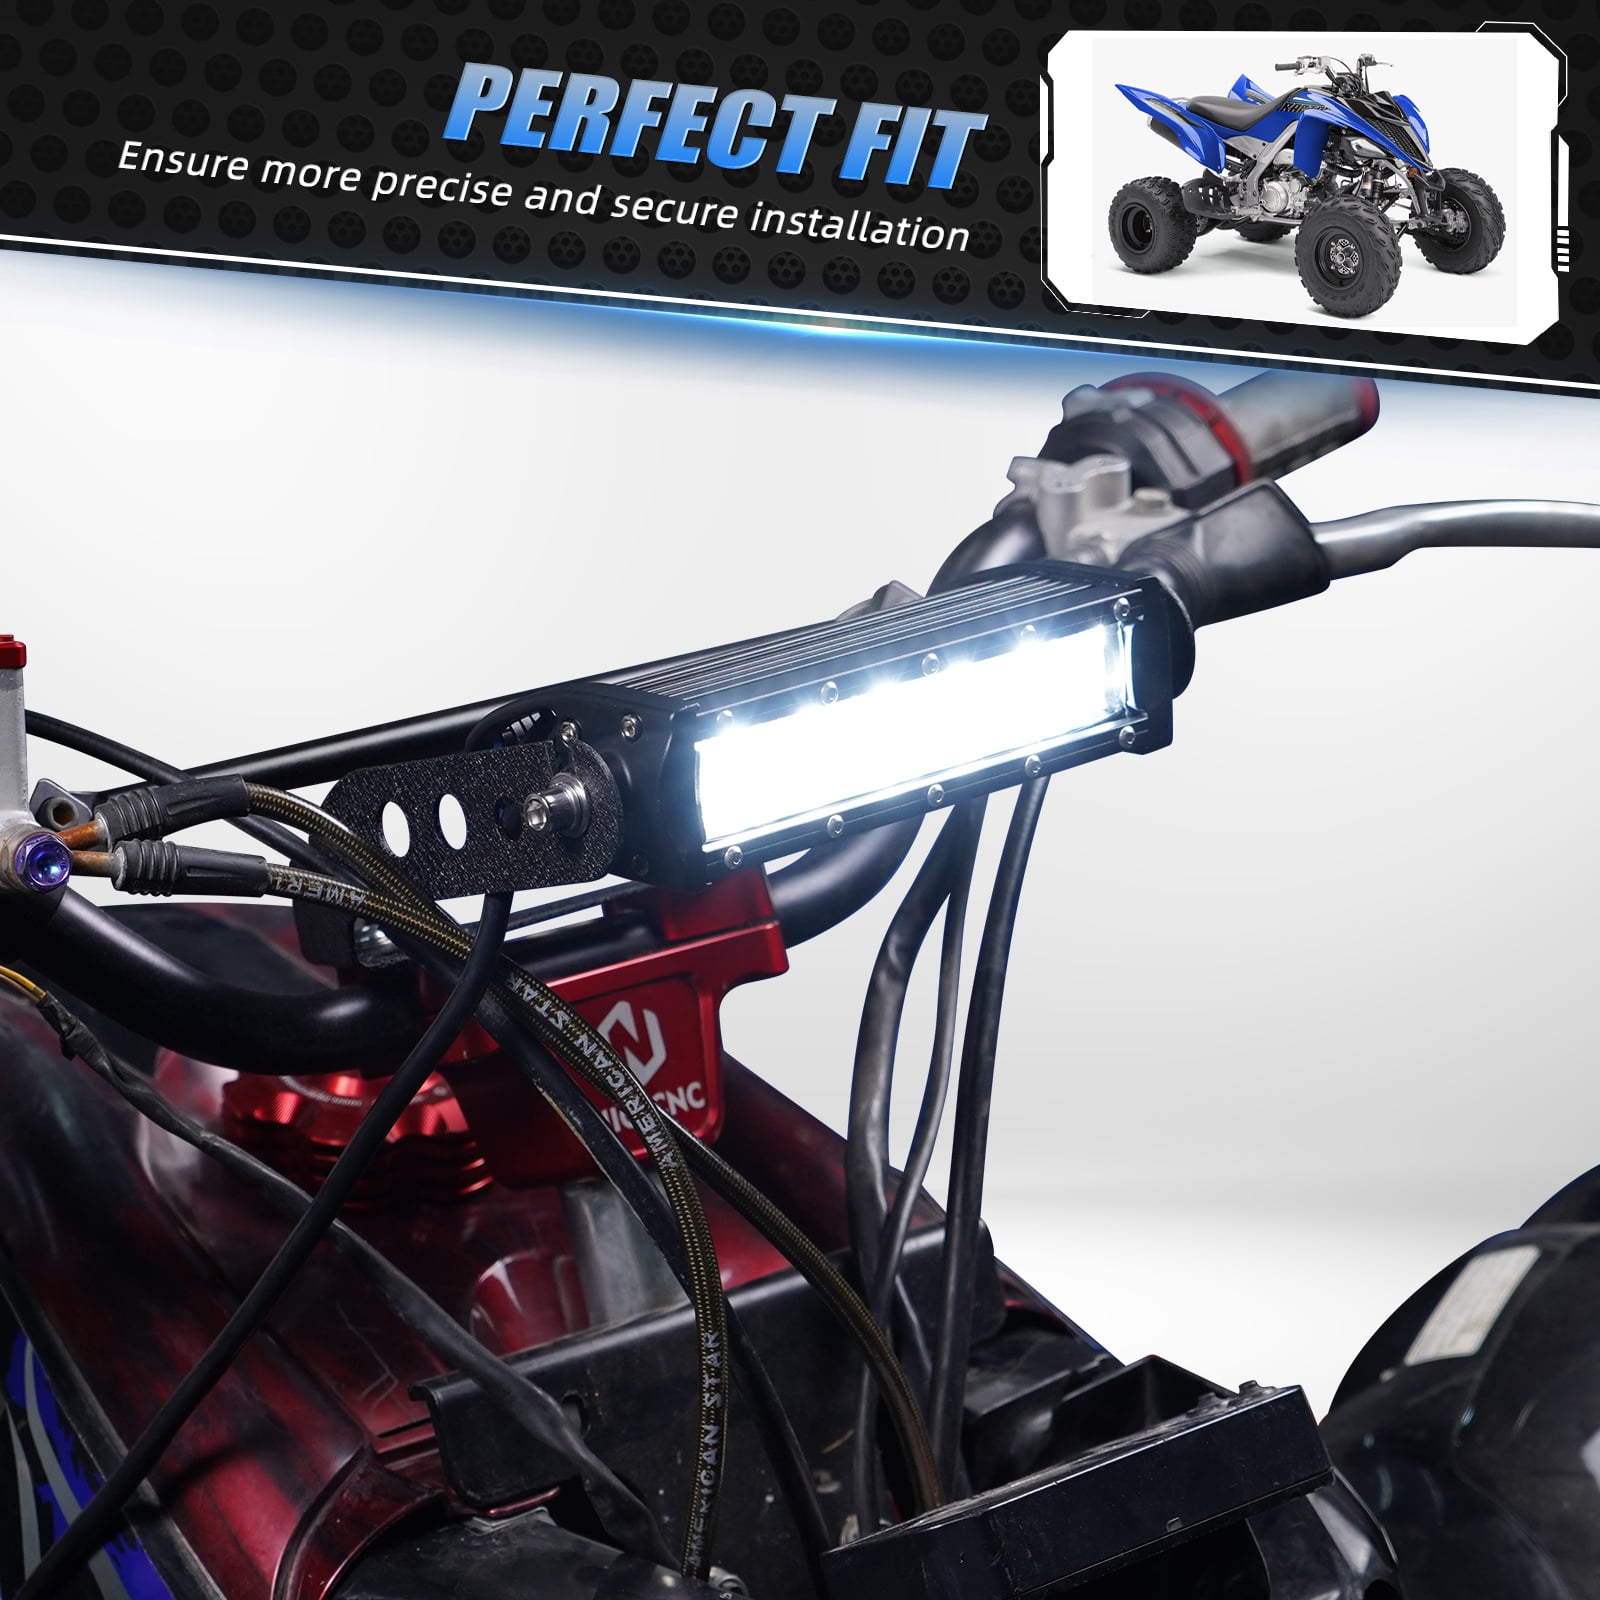 Universal ATV 60W LED Headlight Work Light with Bracket For Yamaha YFZ450R/X Raptor 700/R Banshee 350